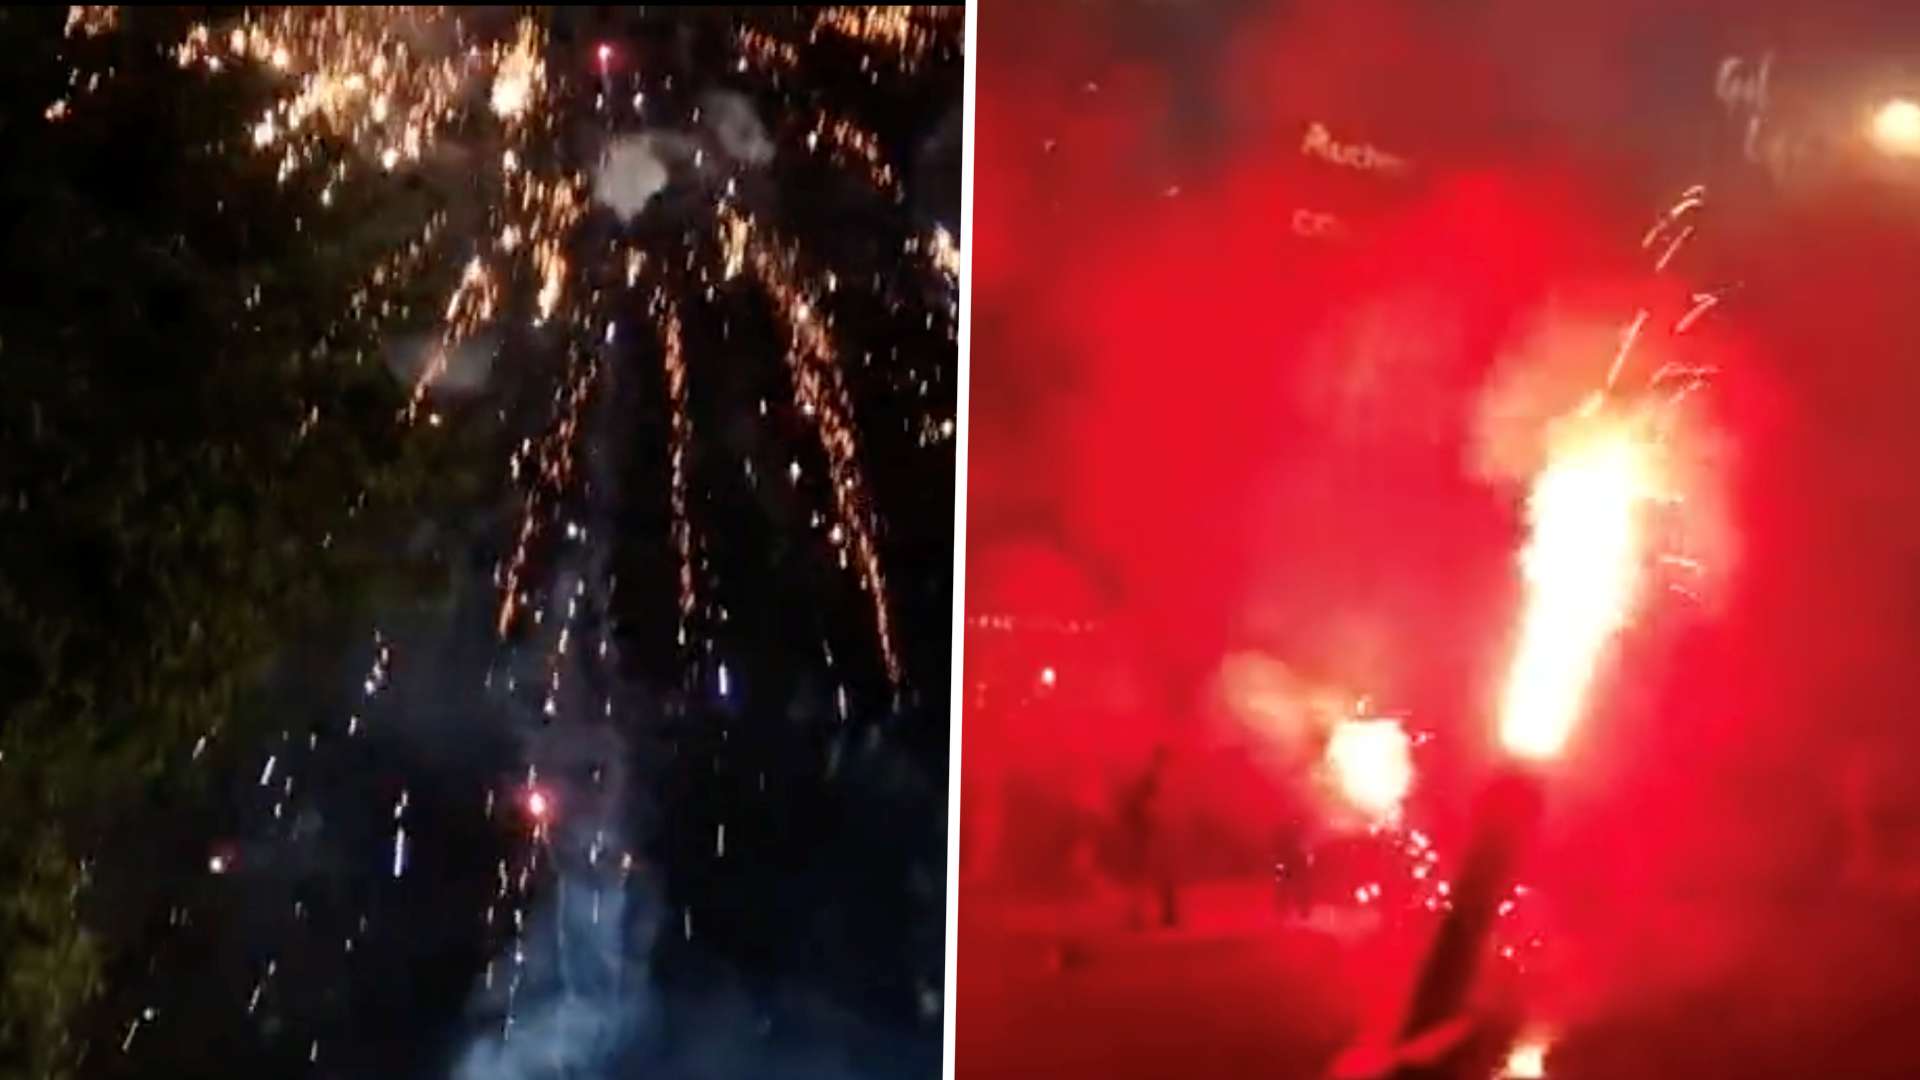 Marseille fireworks flares GFX